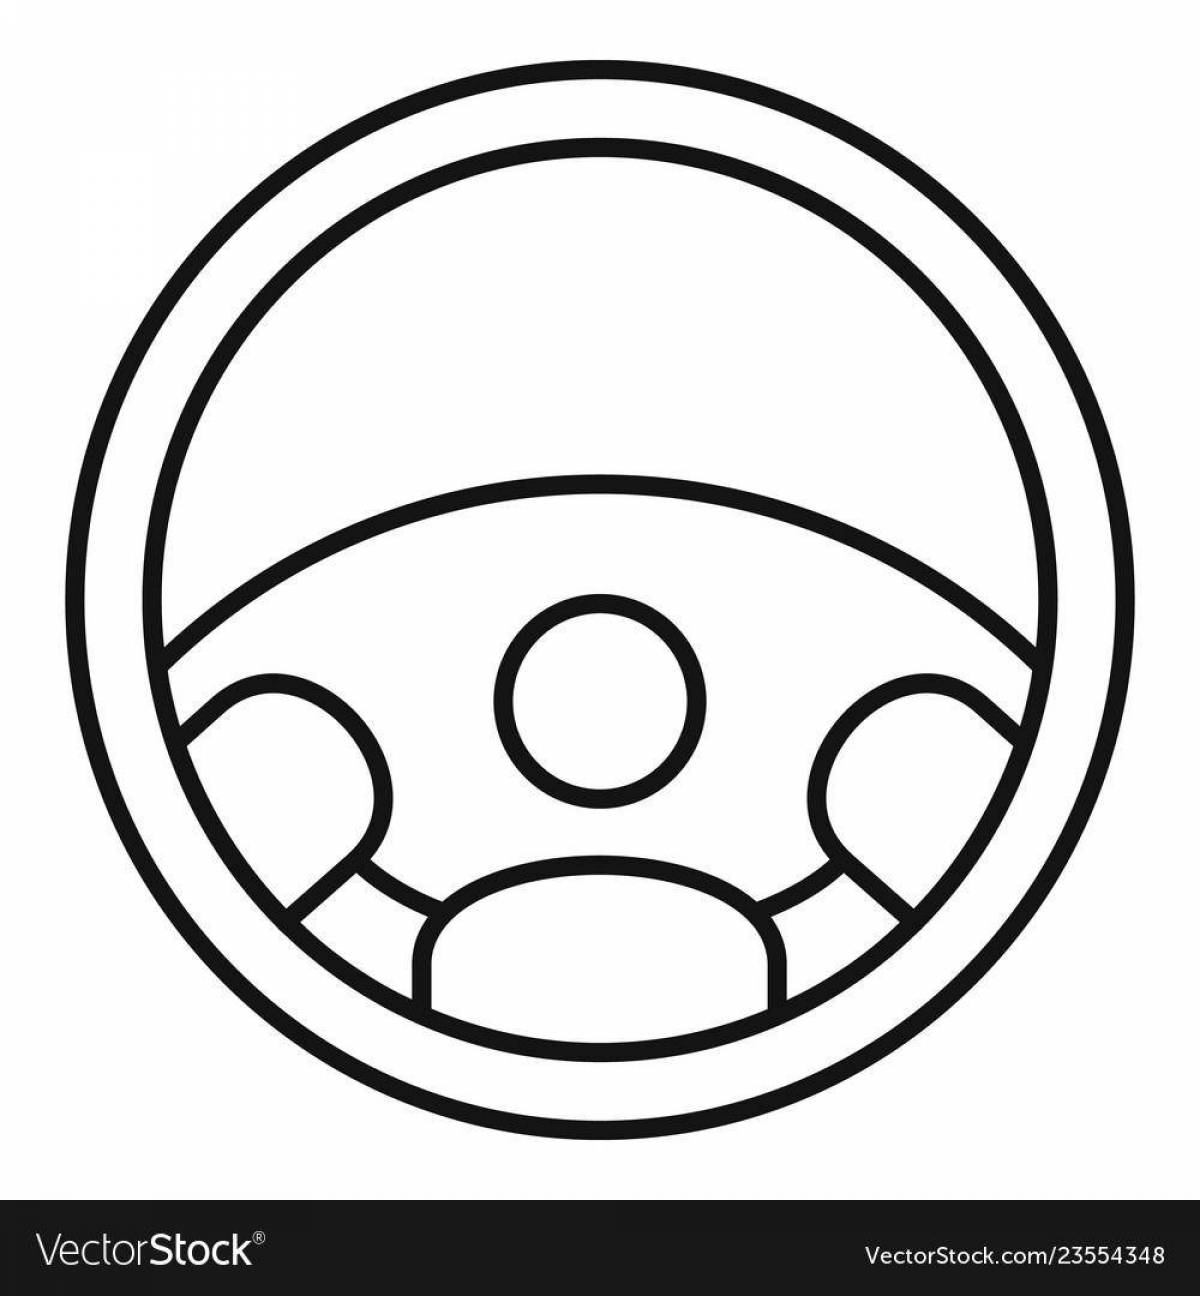 Steering wheel coloring page